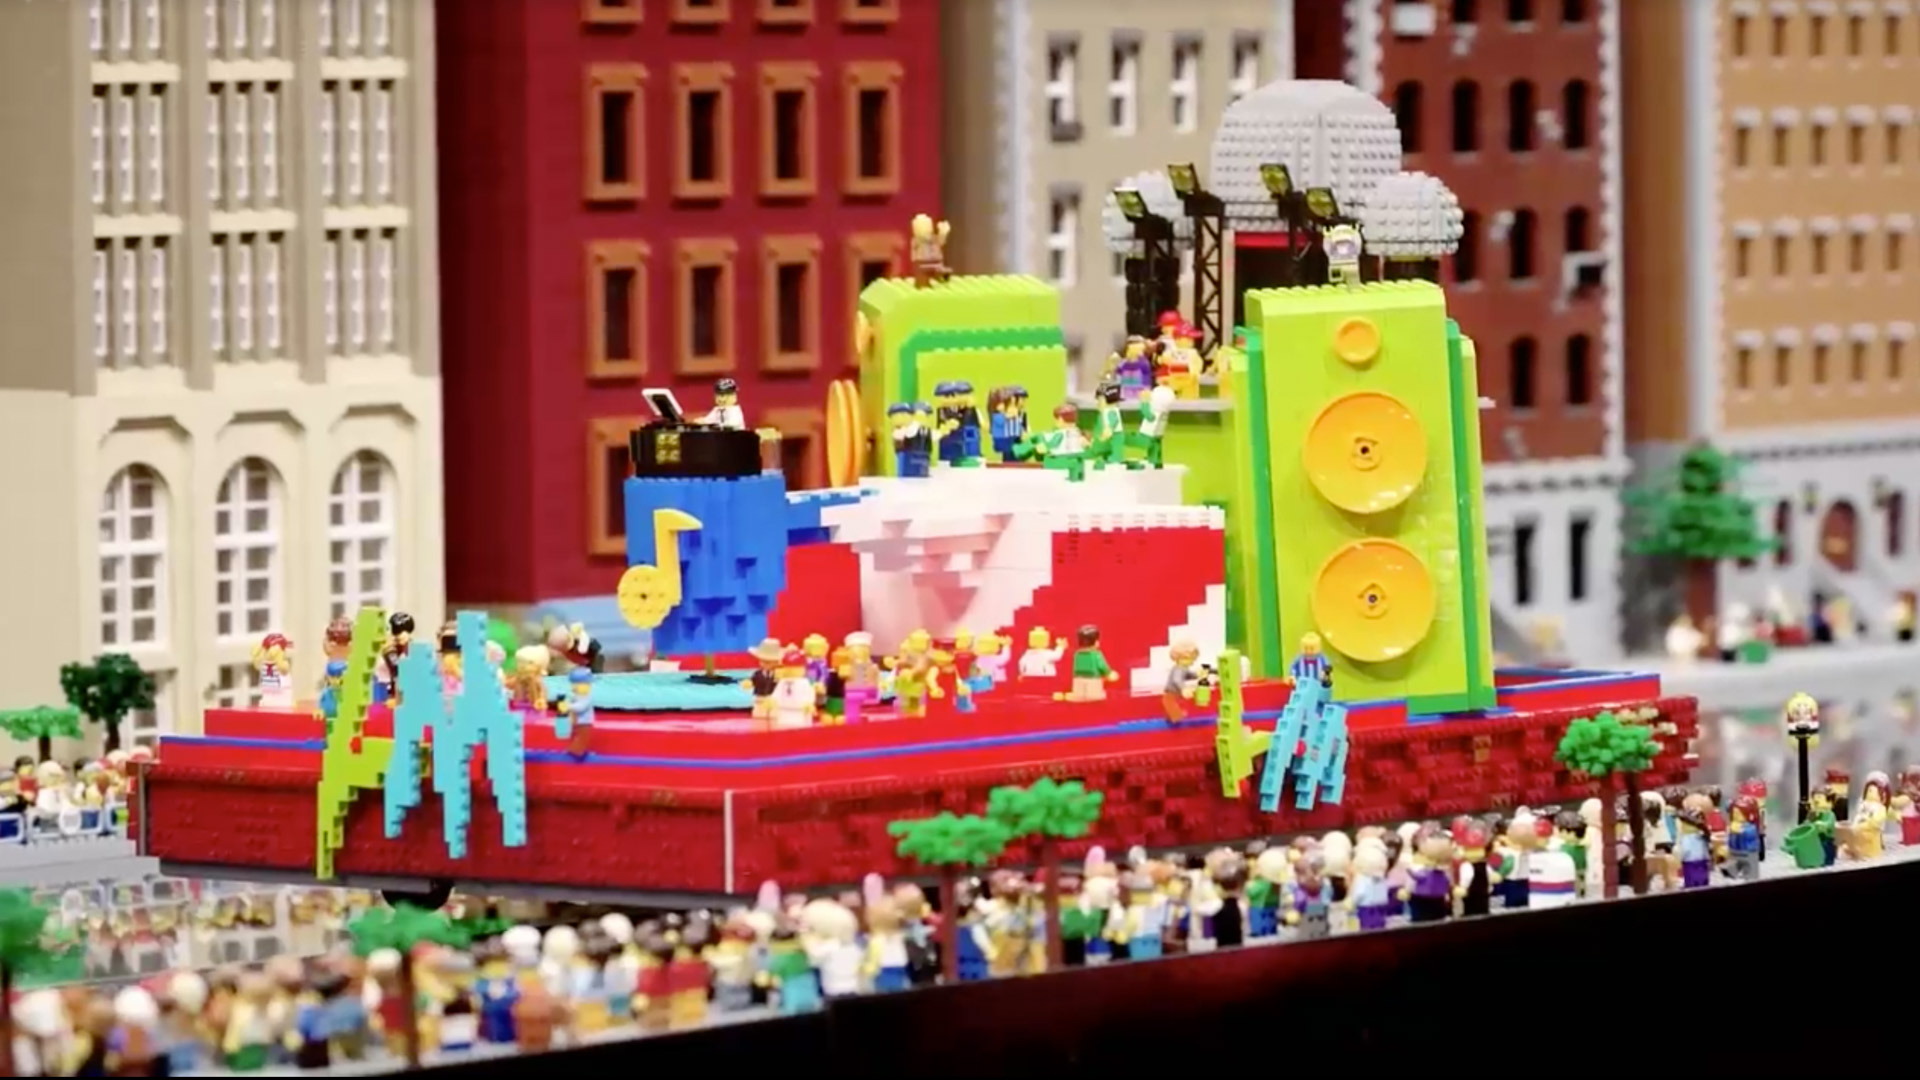 LEGO Masters U.S Season 2 – LEGO Parade Day – Syreeta and Randall - Journey Through The Elements